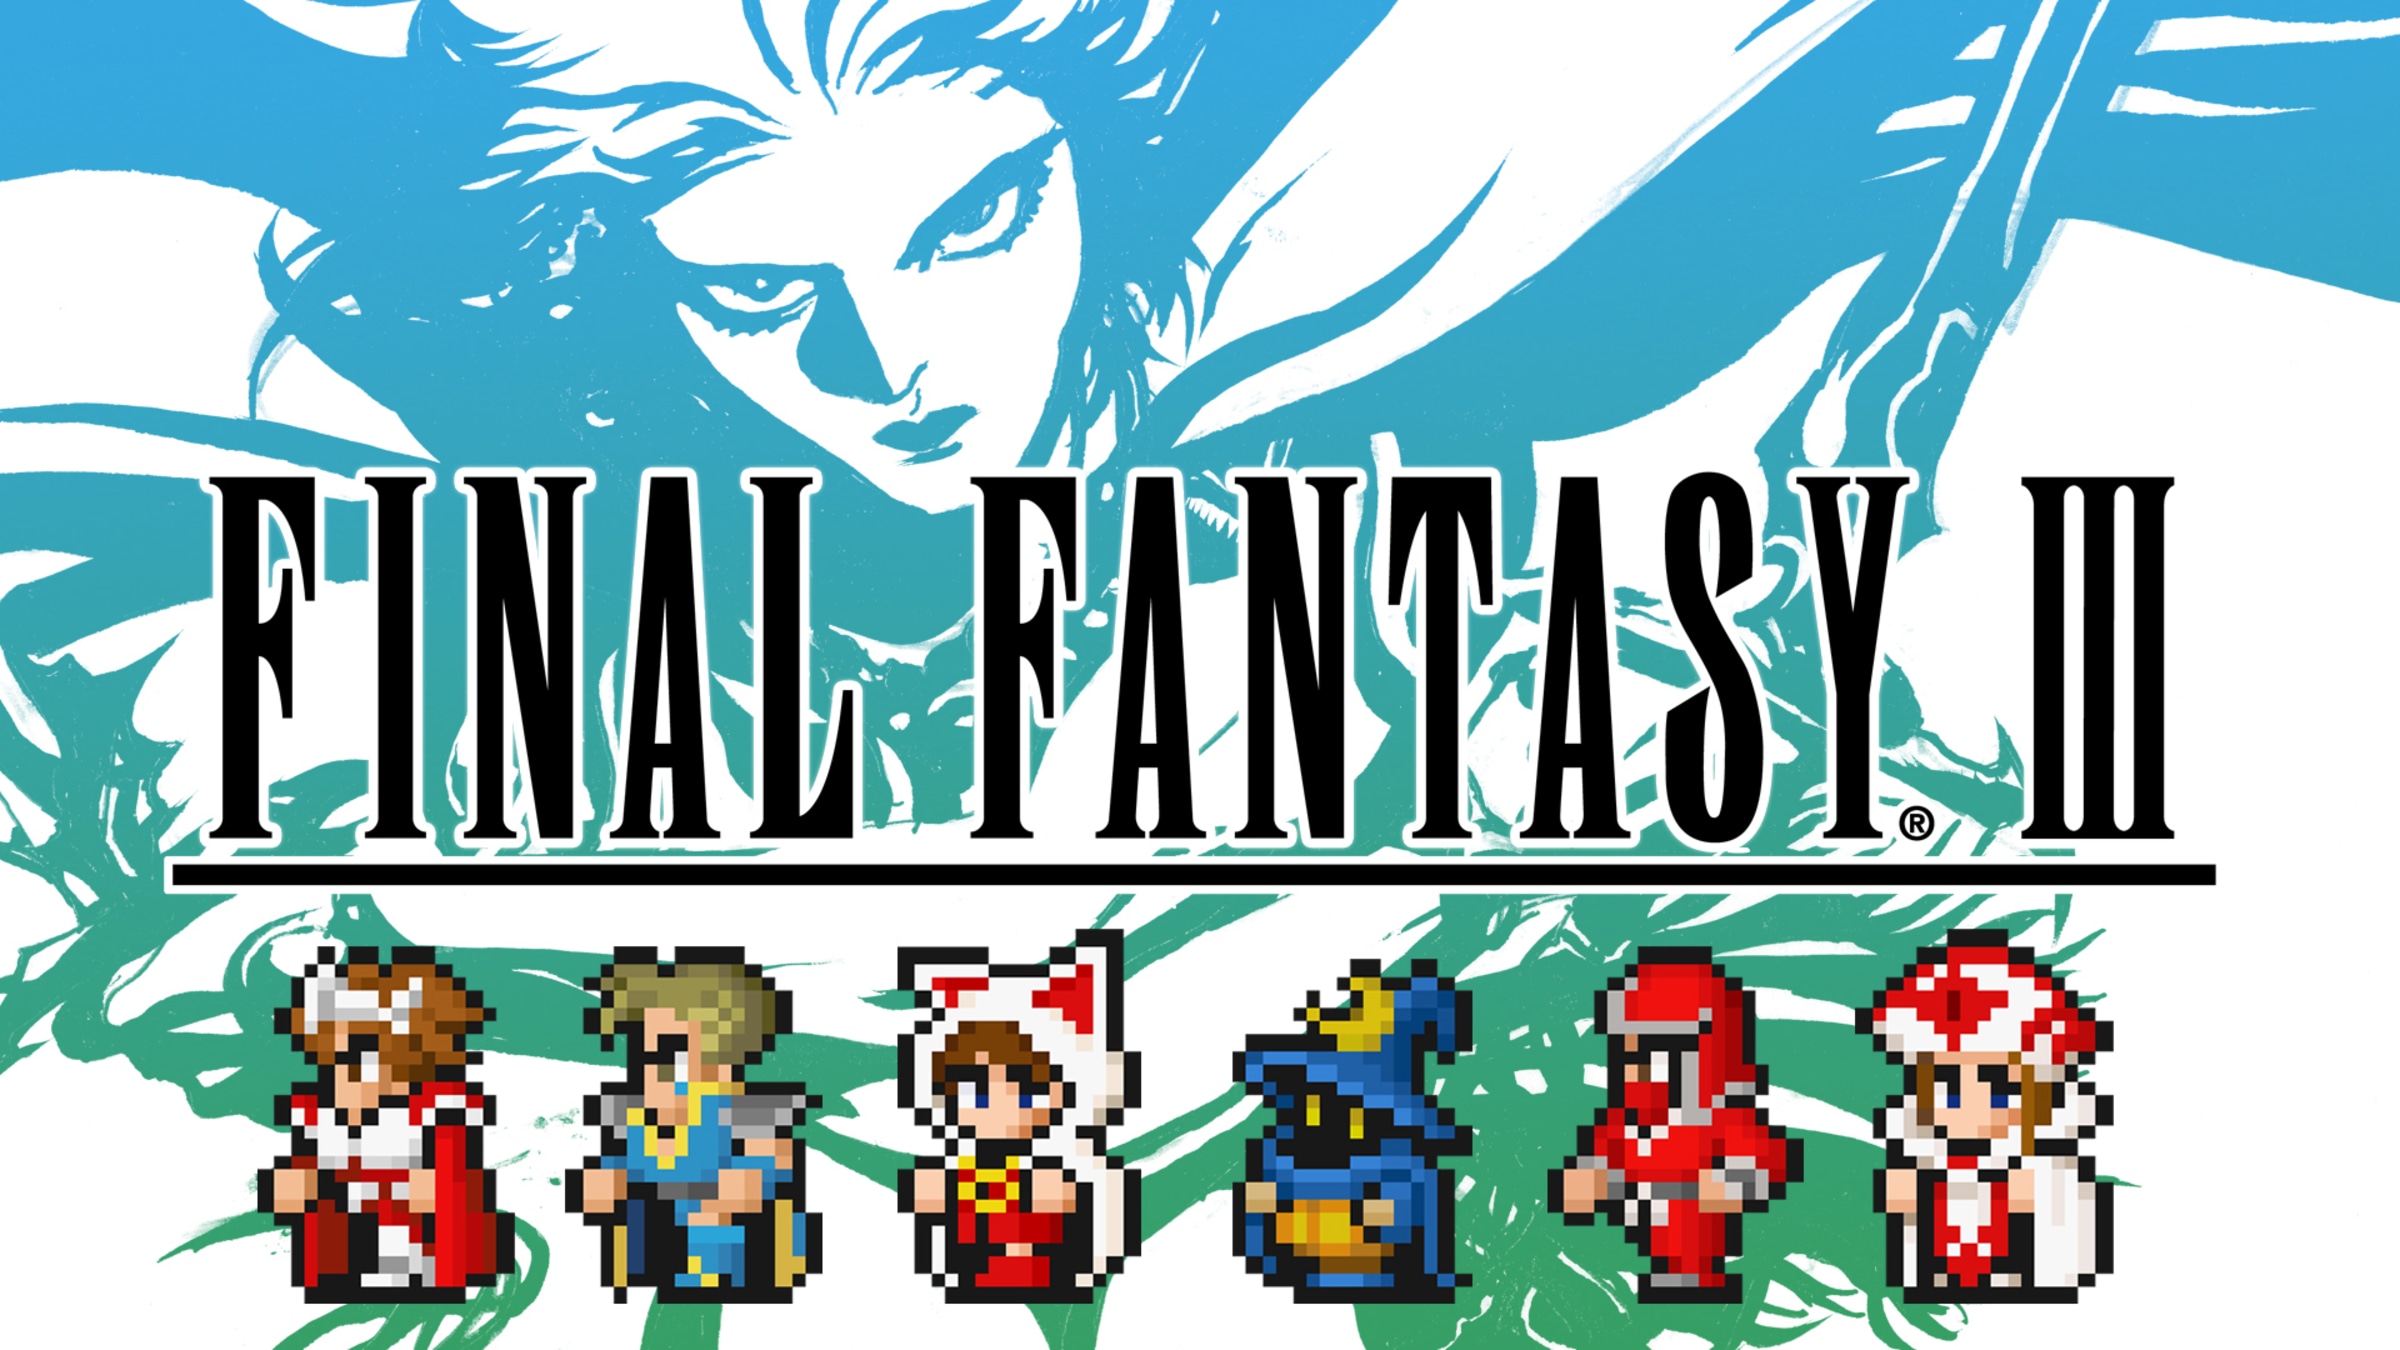 FINAL FANTASY III for Nintendo Switch - Nintendo Official Site